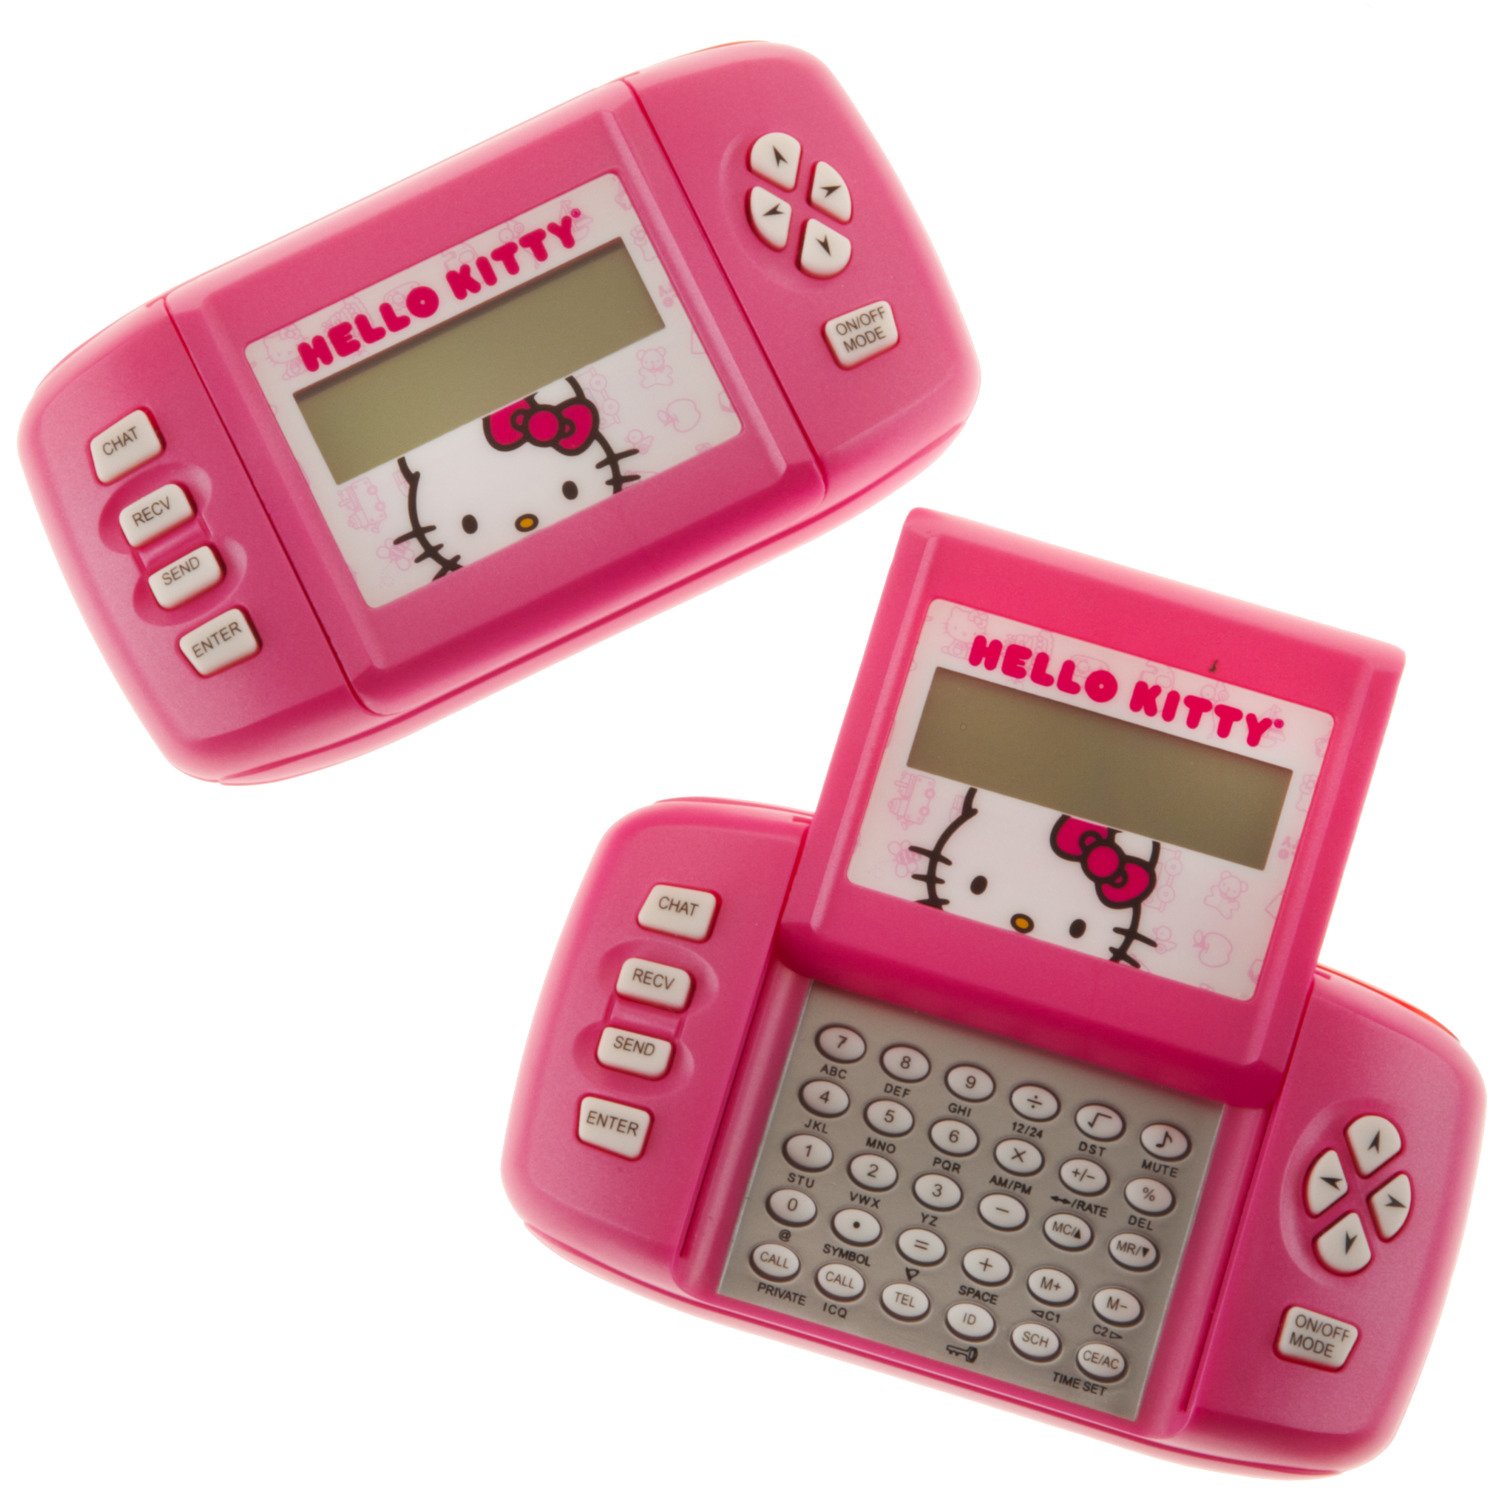 Hello Kitty SMS Text Messenger- Pink (79009) - SMS Text Messenger